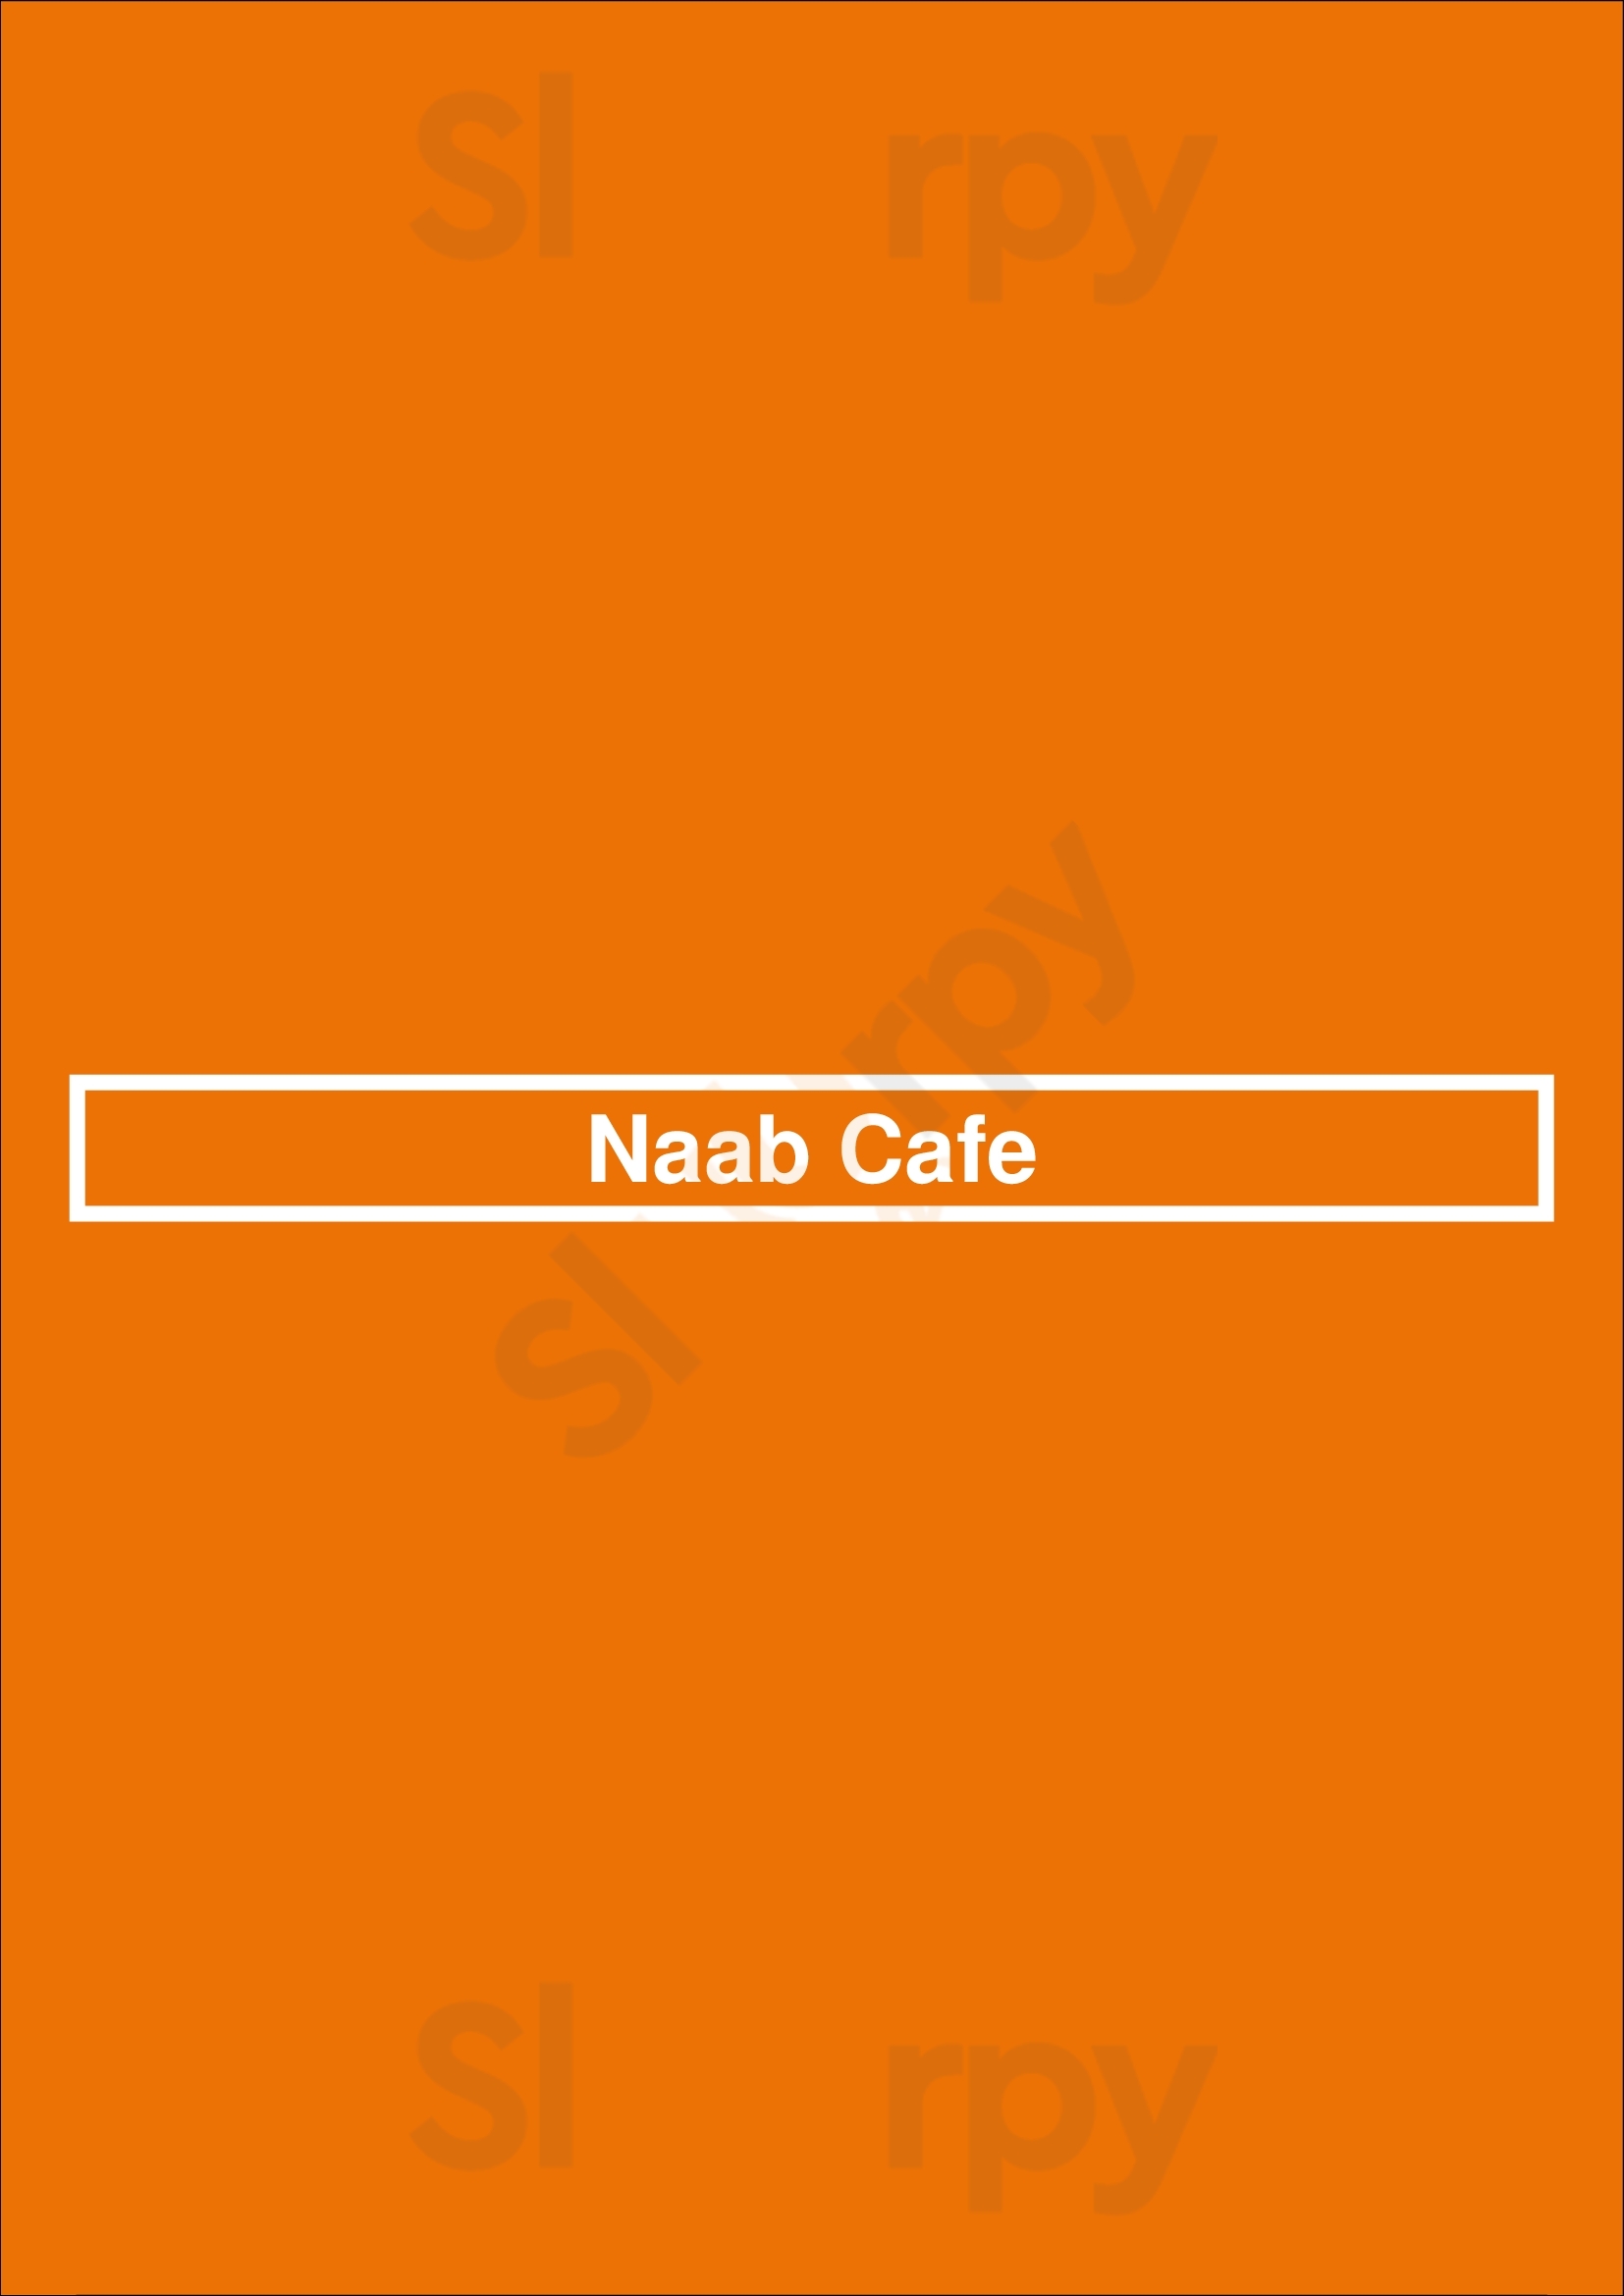 Naab Cafe Los Angeles Menu - 1